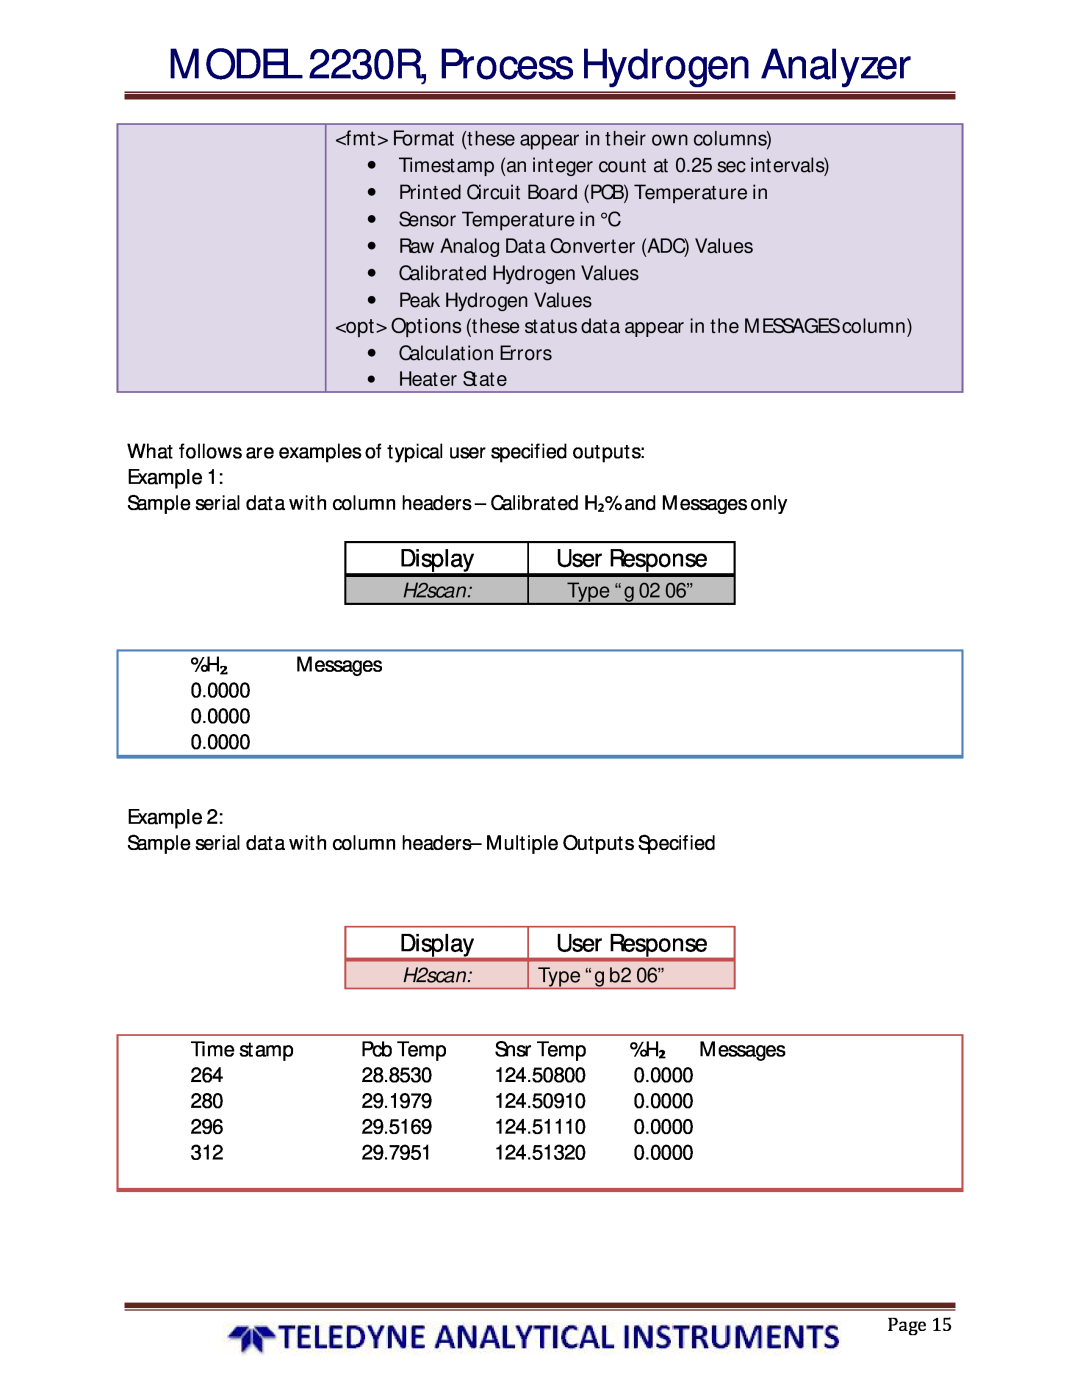 Teledyne instruction manual Display, User Response, MODEL 2230R, Process Hydrogen Analyzer 